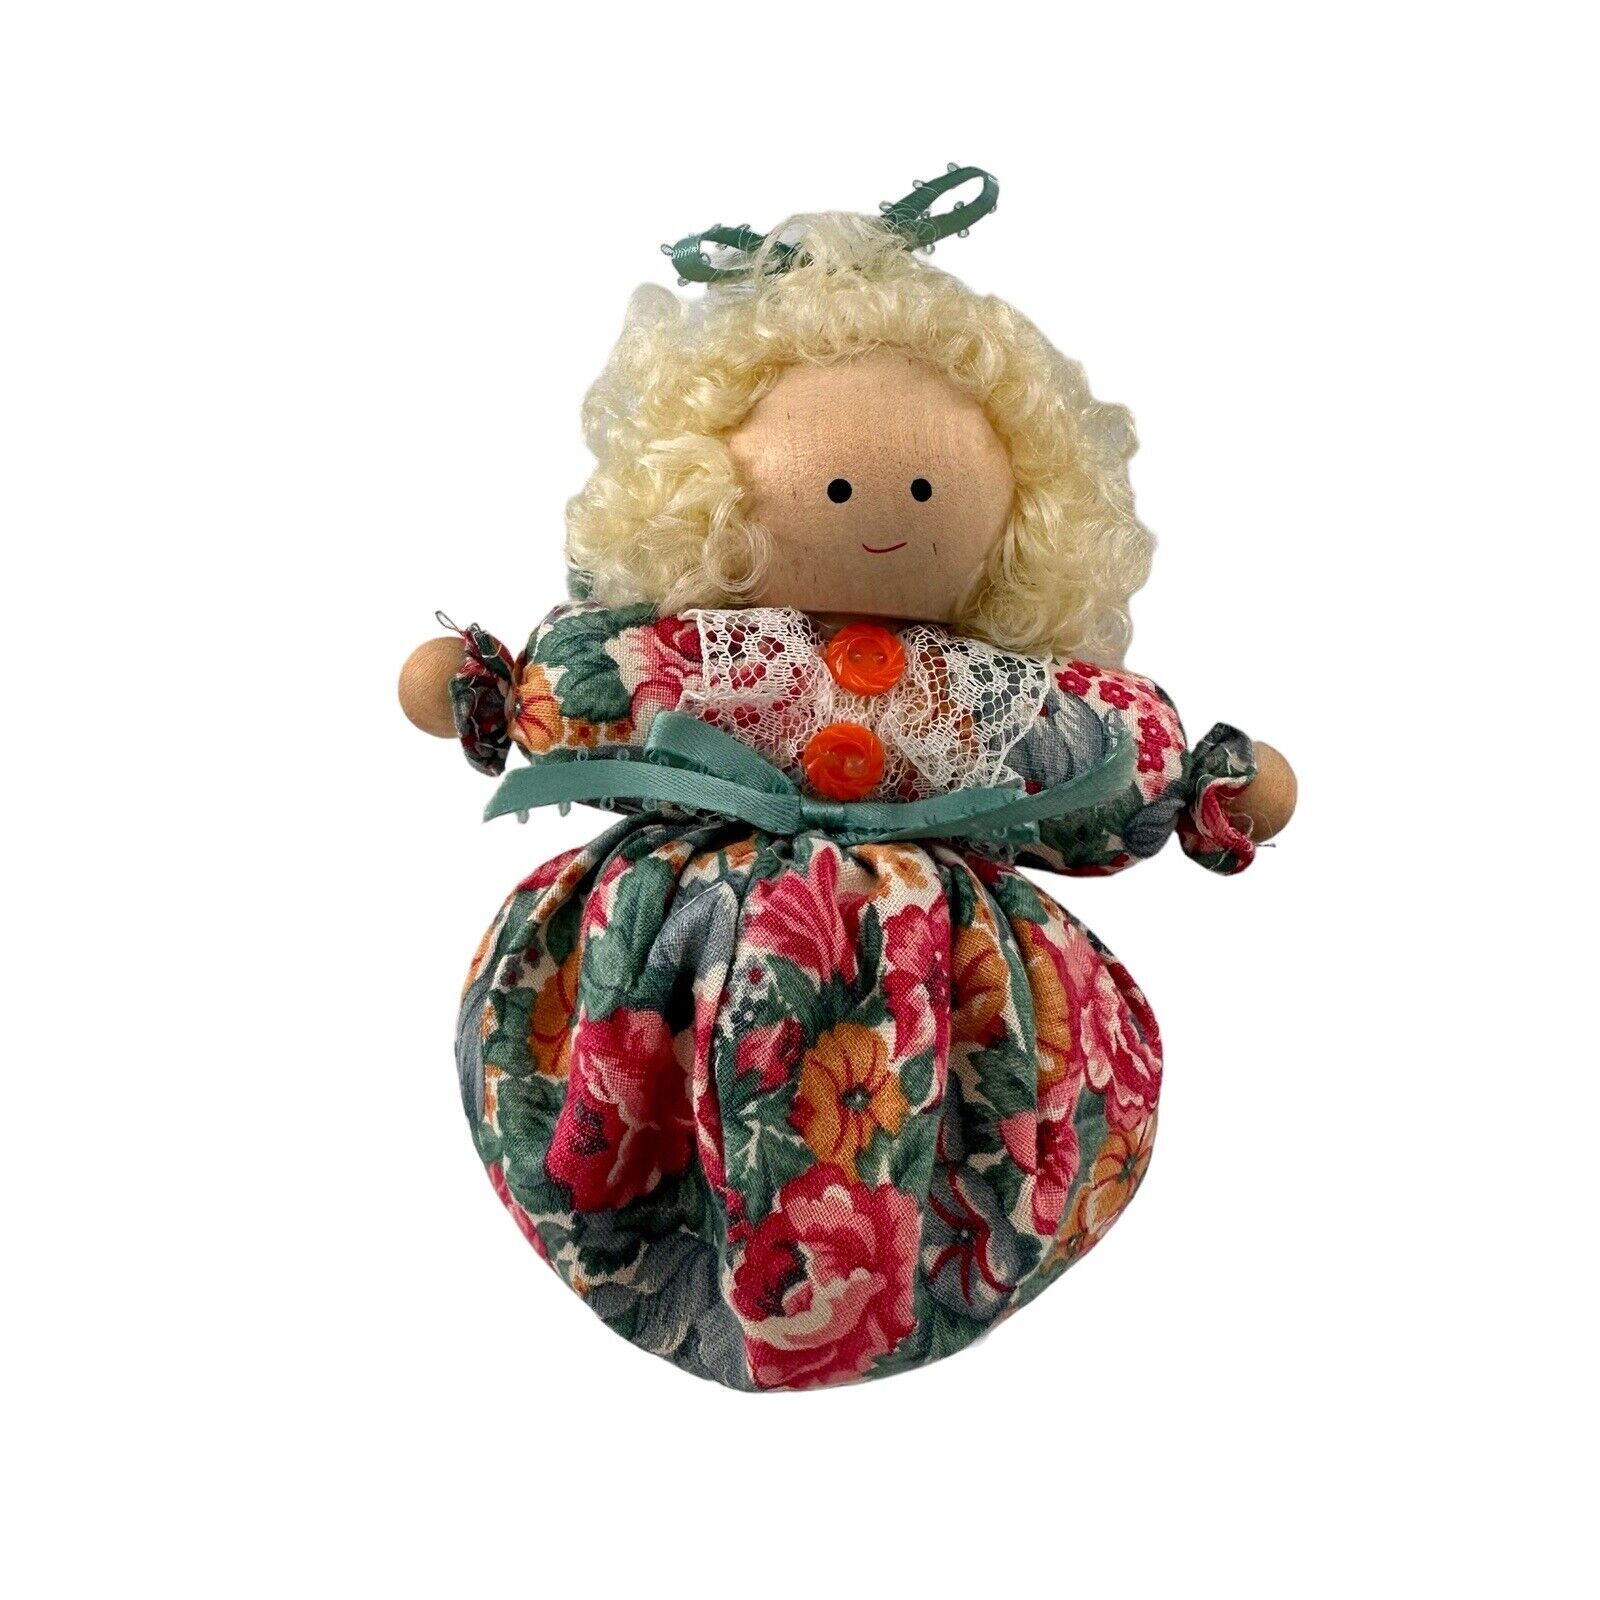 Vtg Handmade Wooden Doll Gift Christmas Holiday Decor Figure 5 Inch Cloth Bean